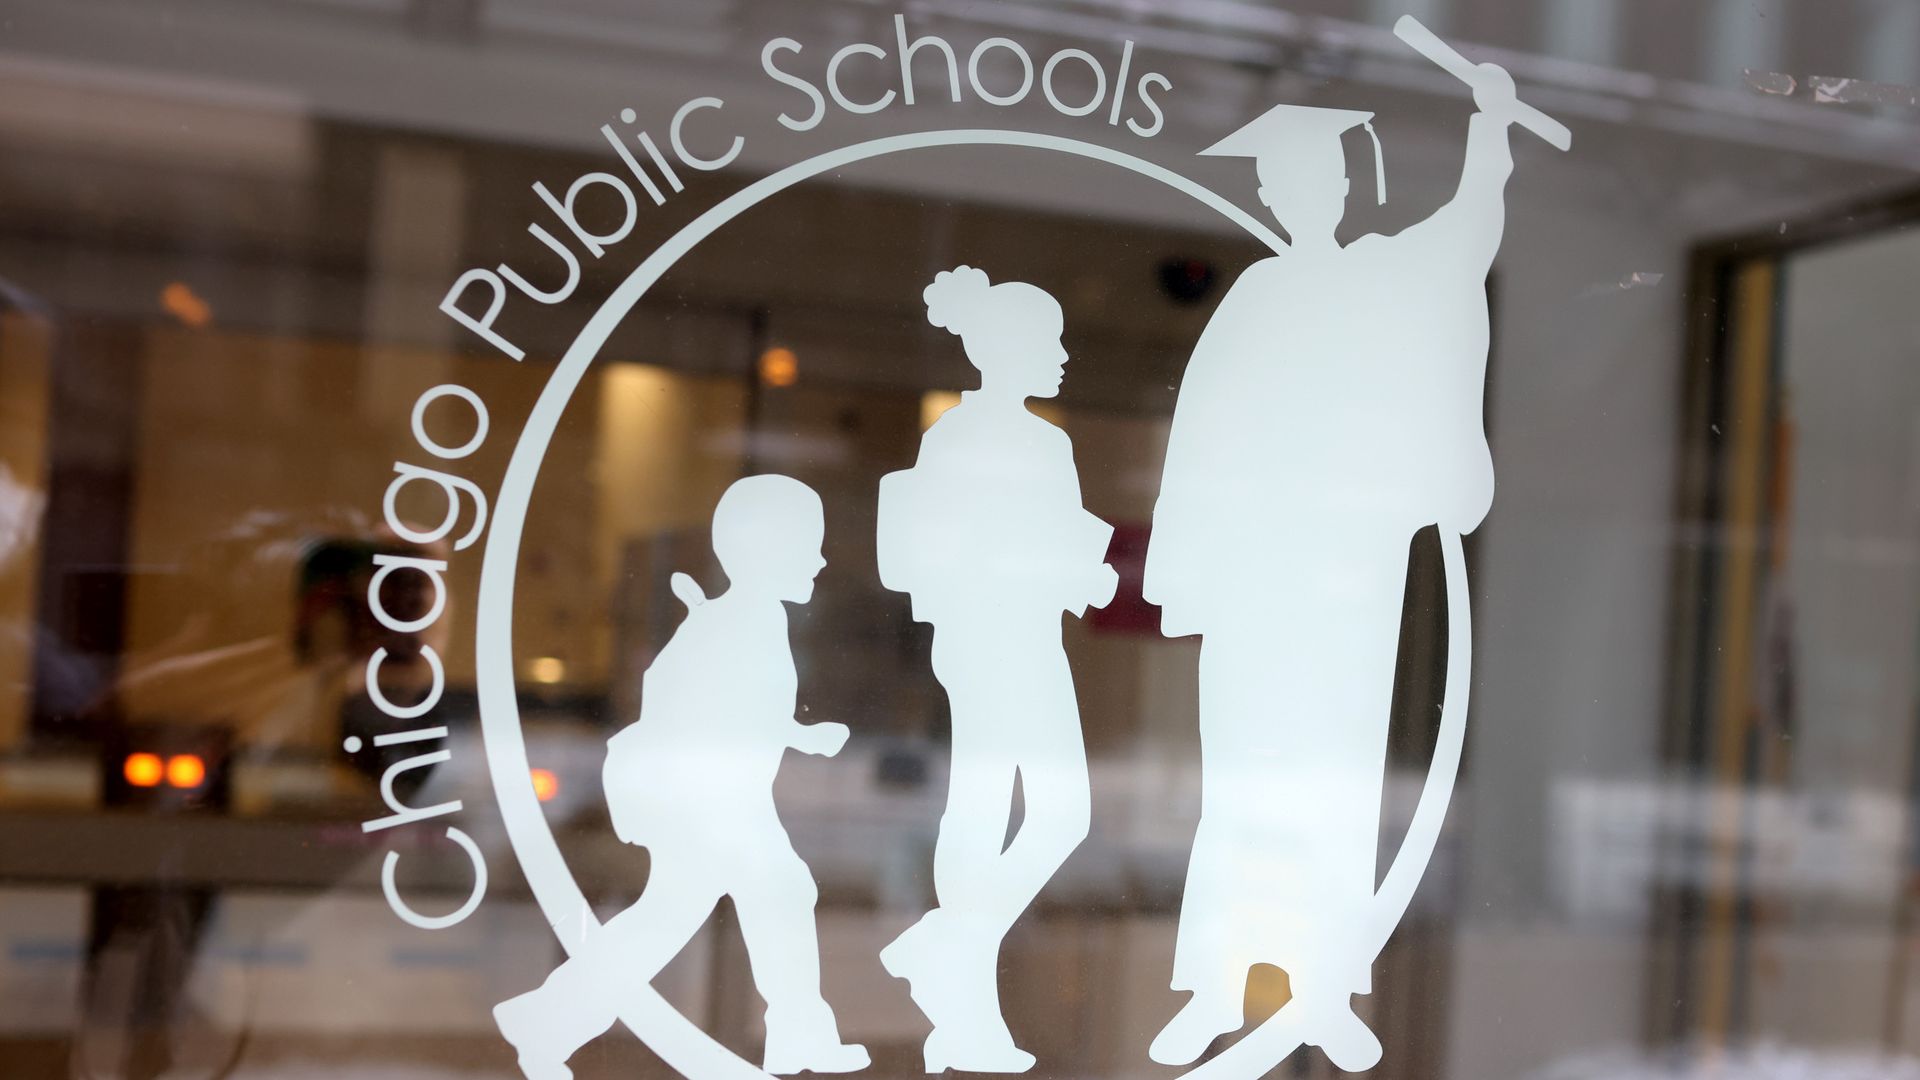 Chicago Public Schools logo 